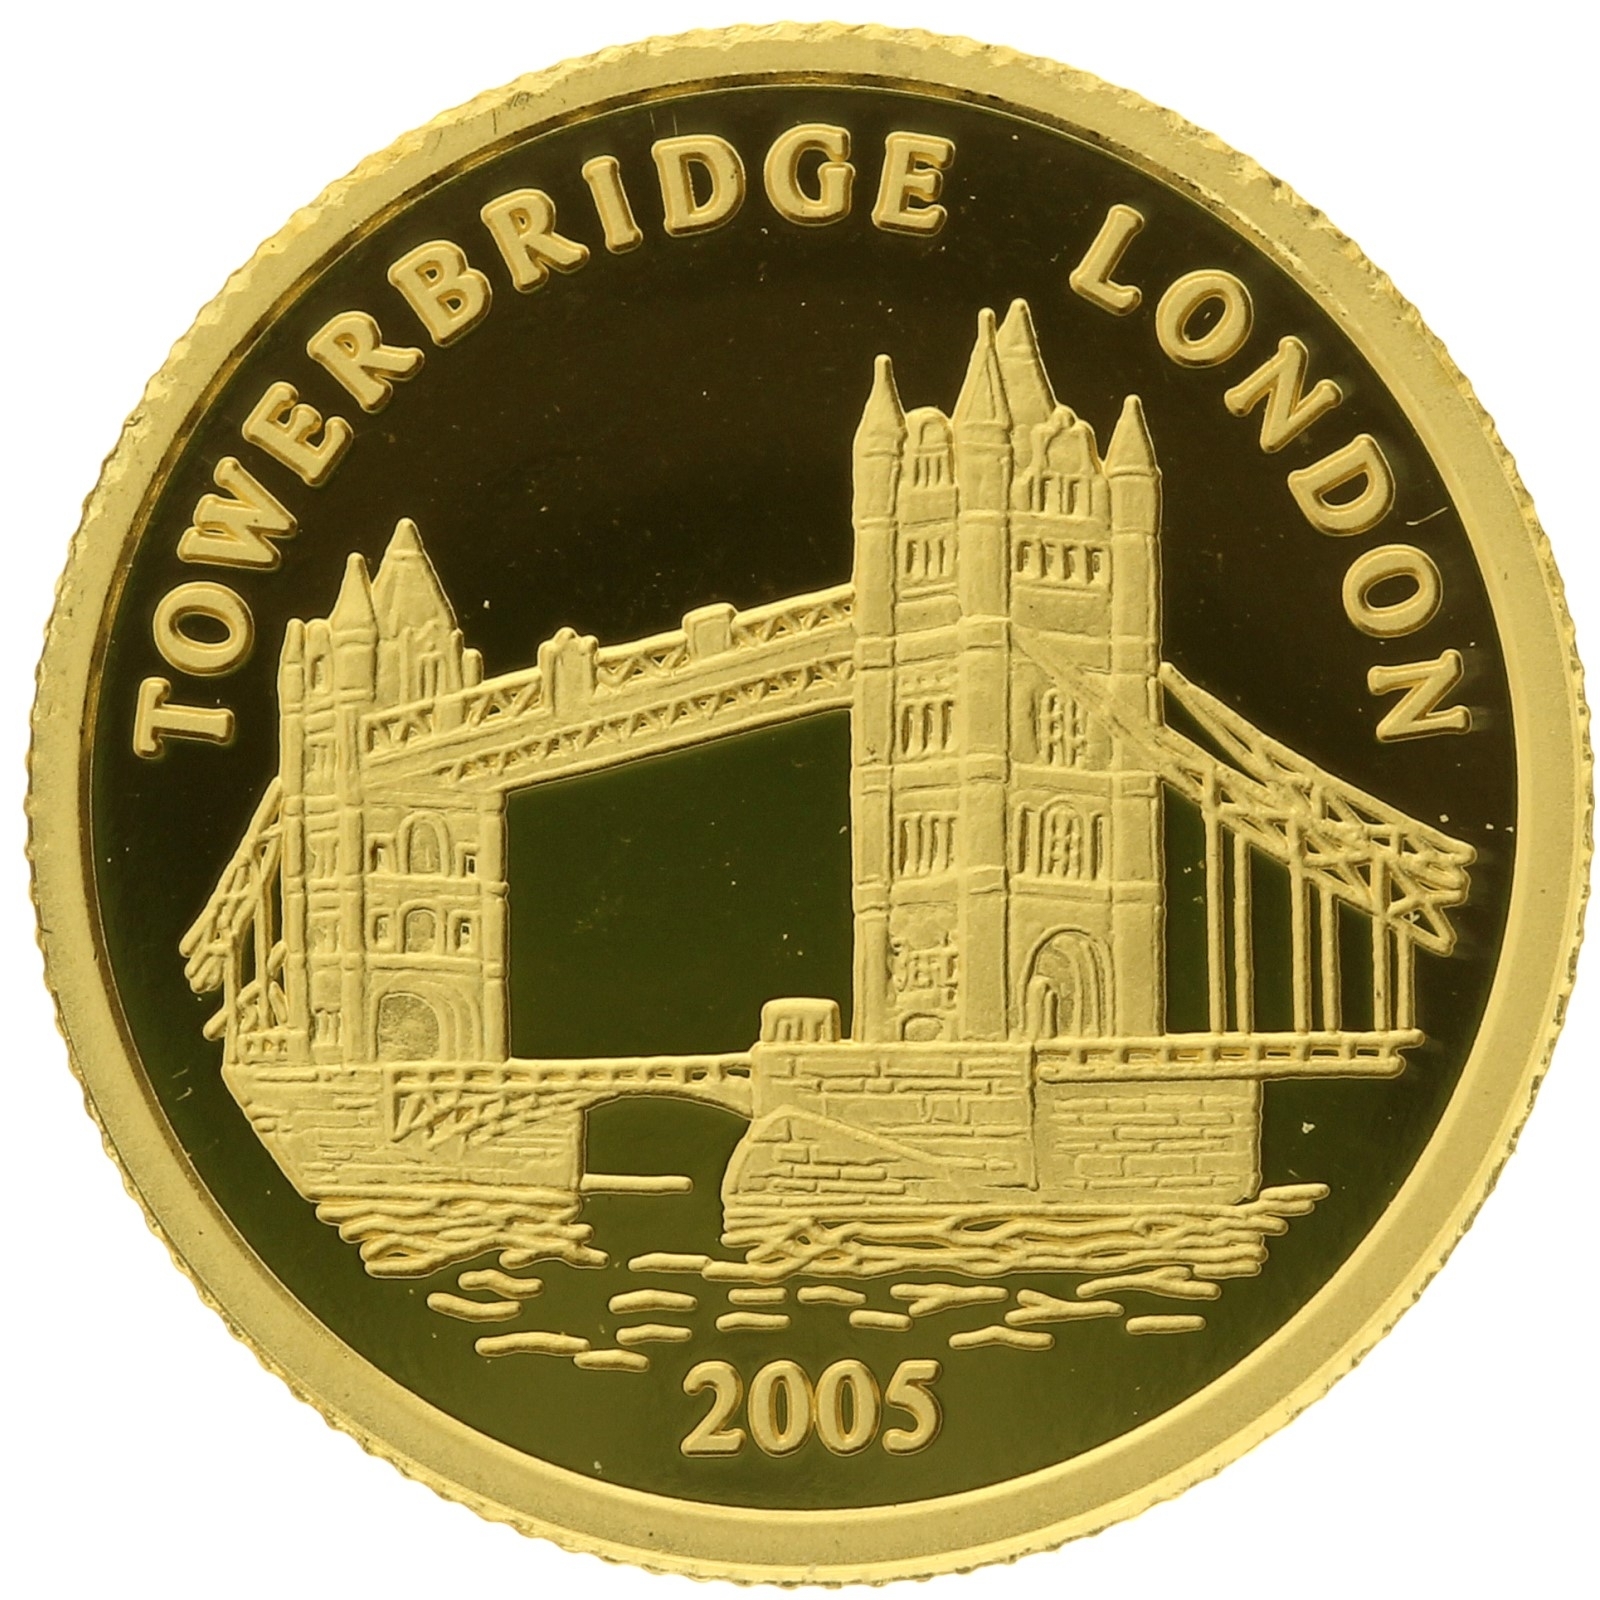 Togo - 1500 francs - 2005 - Tower Bridge - 1/25oz